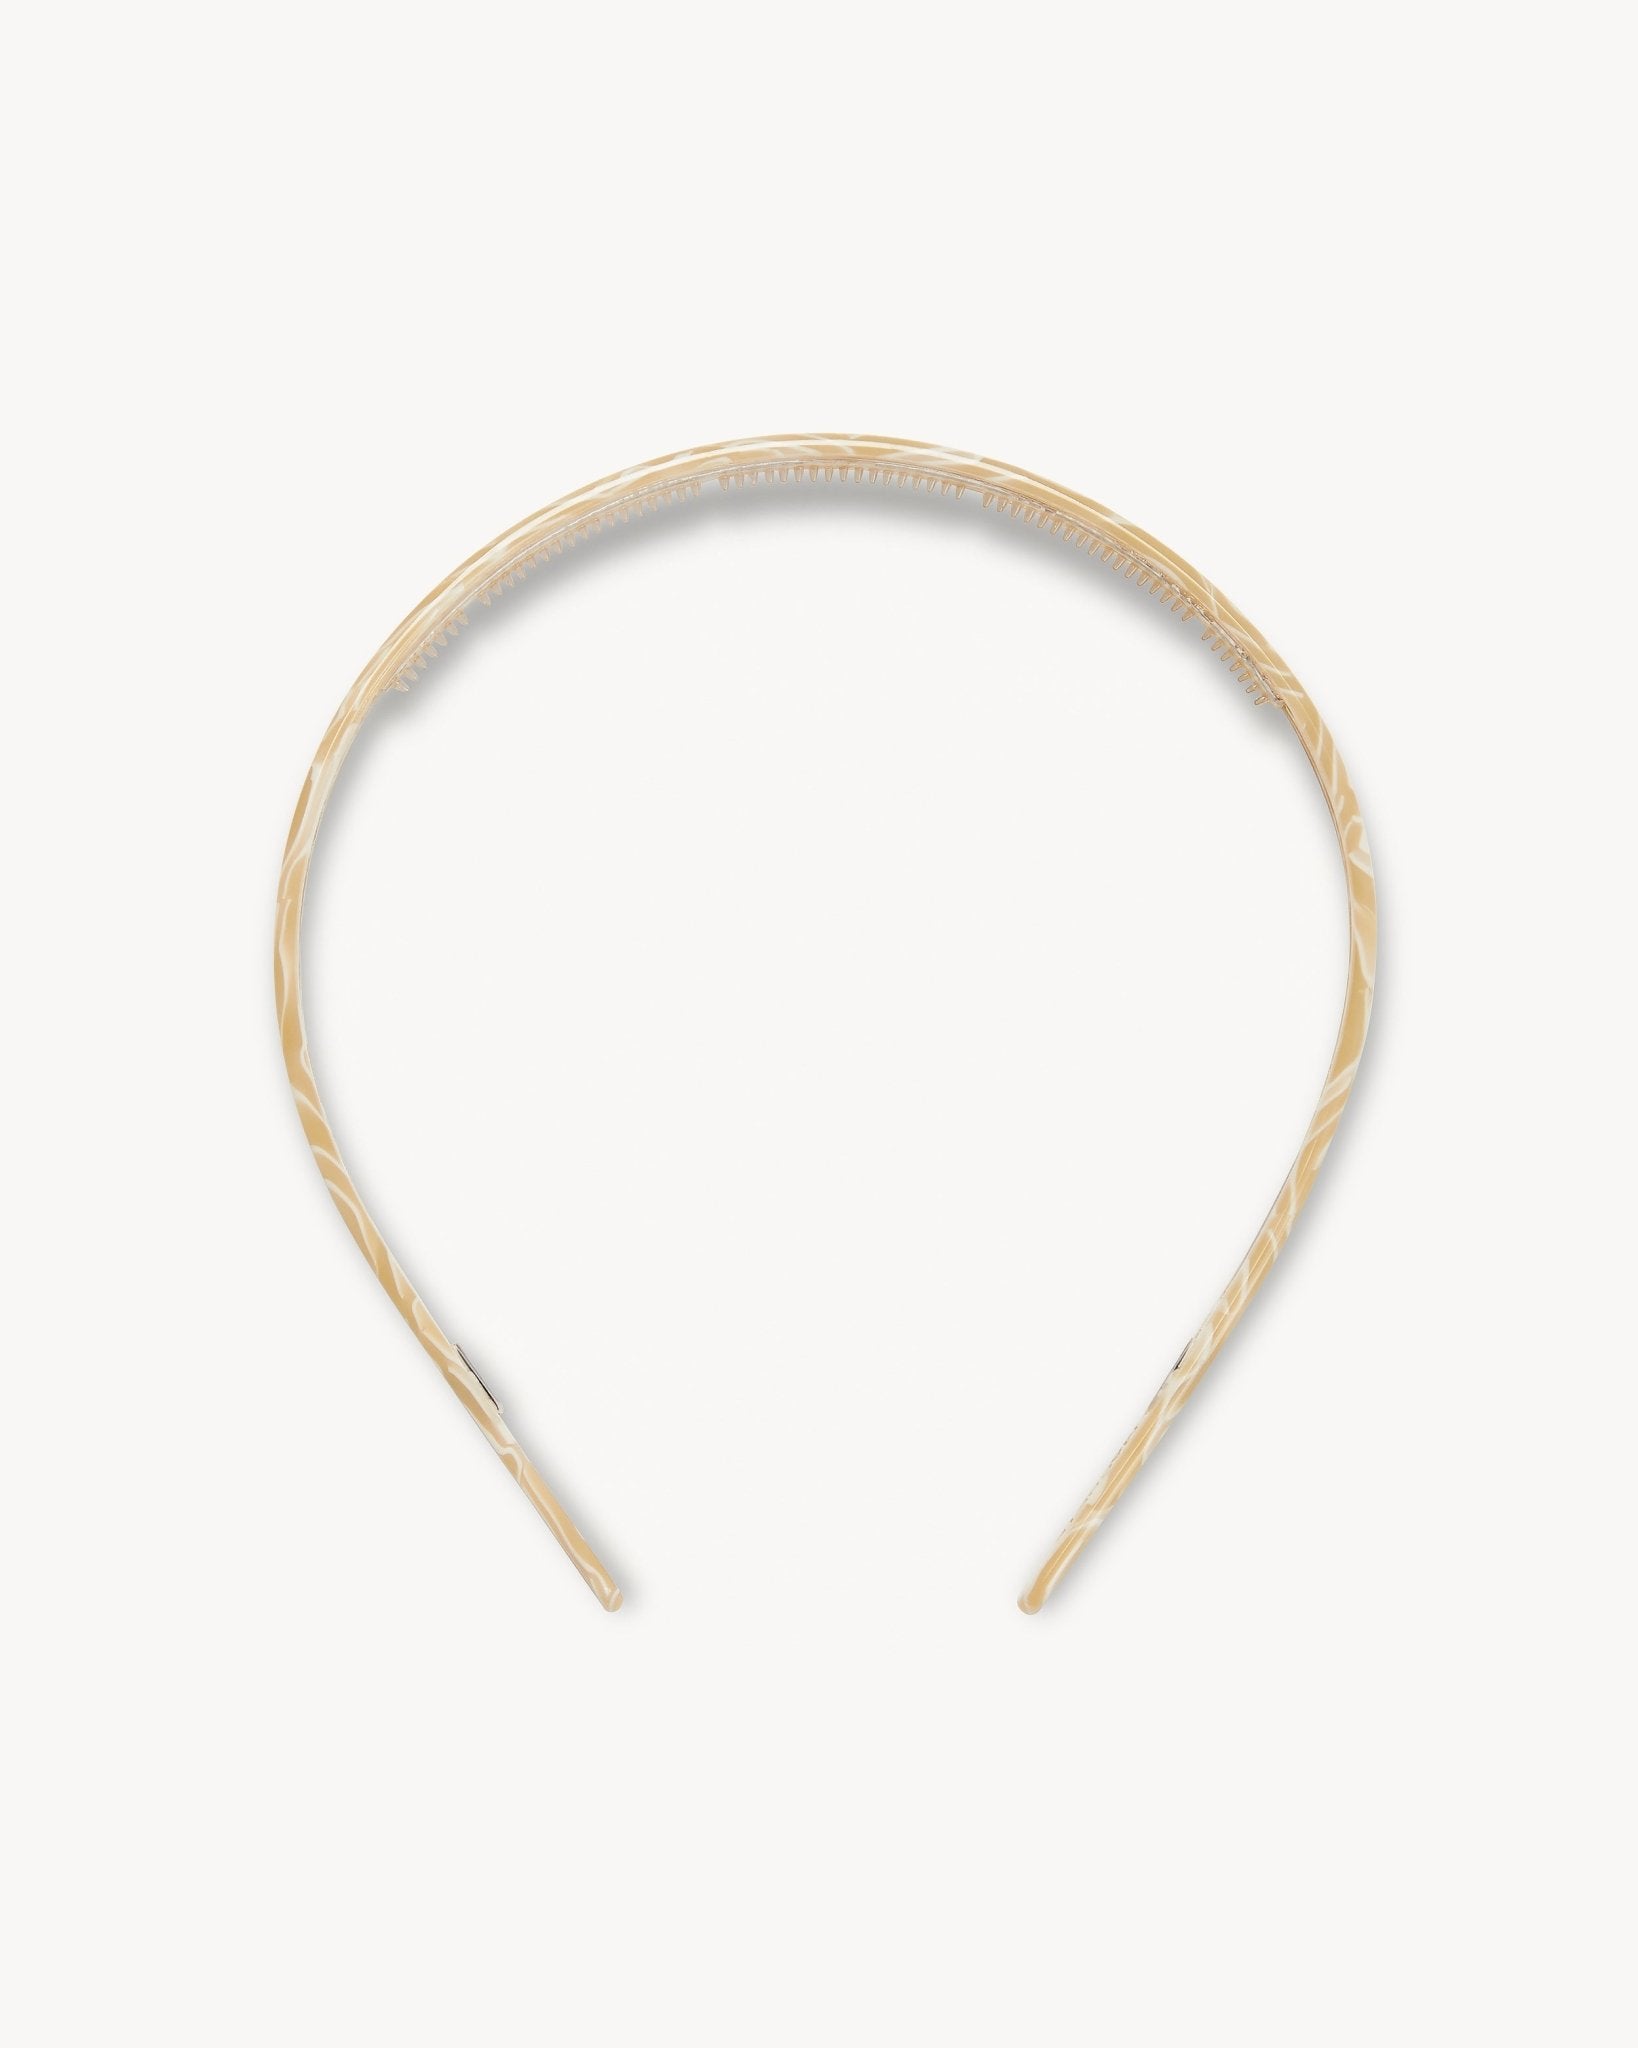 Ultralight Thin Women's Headband in Ivory